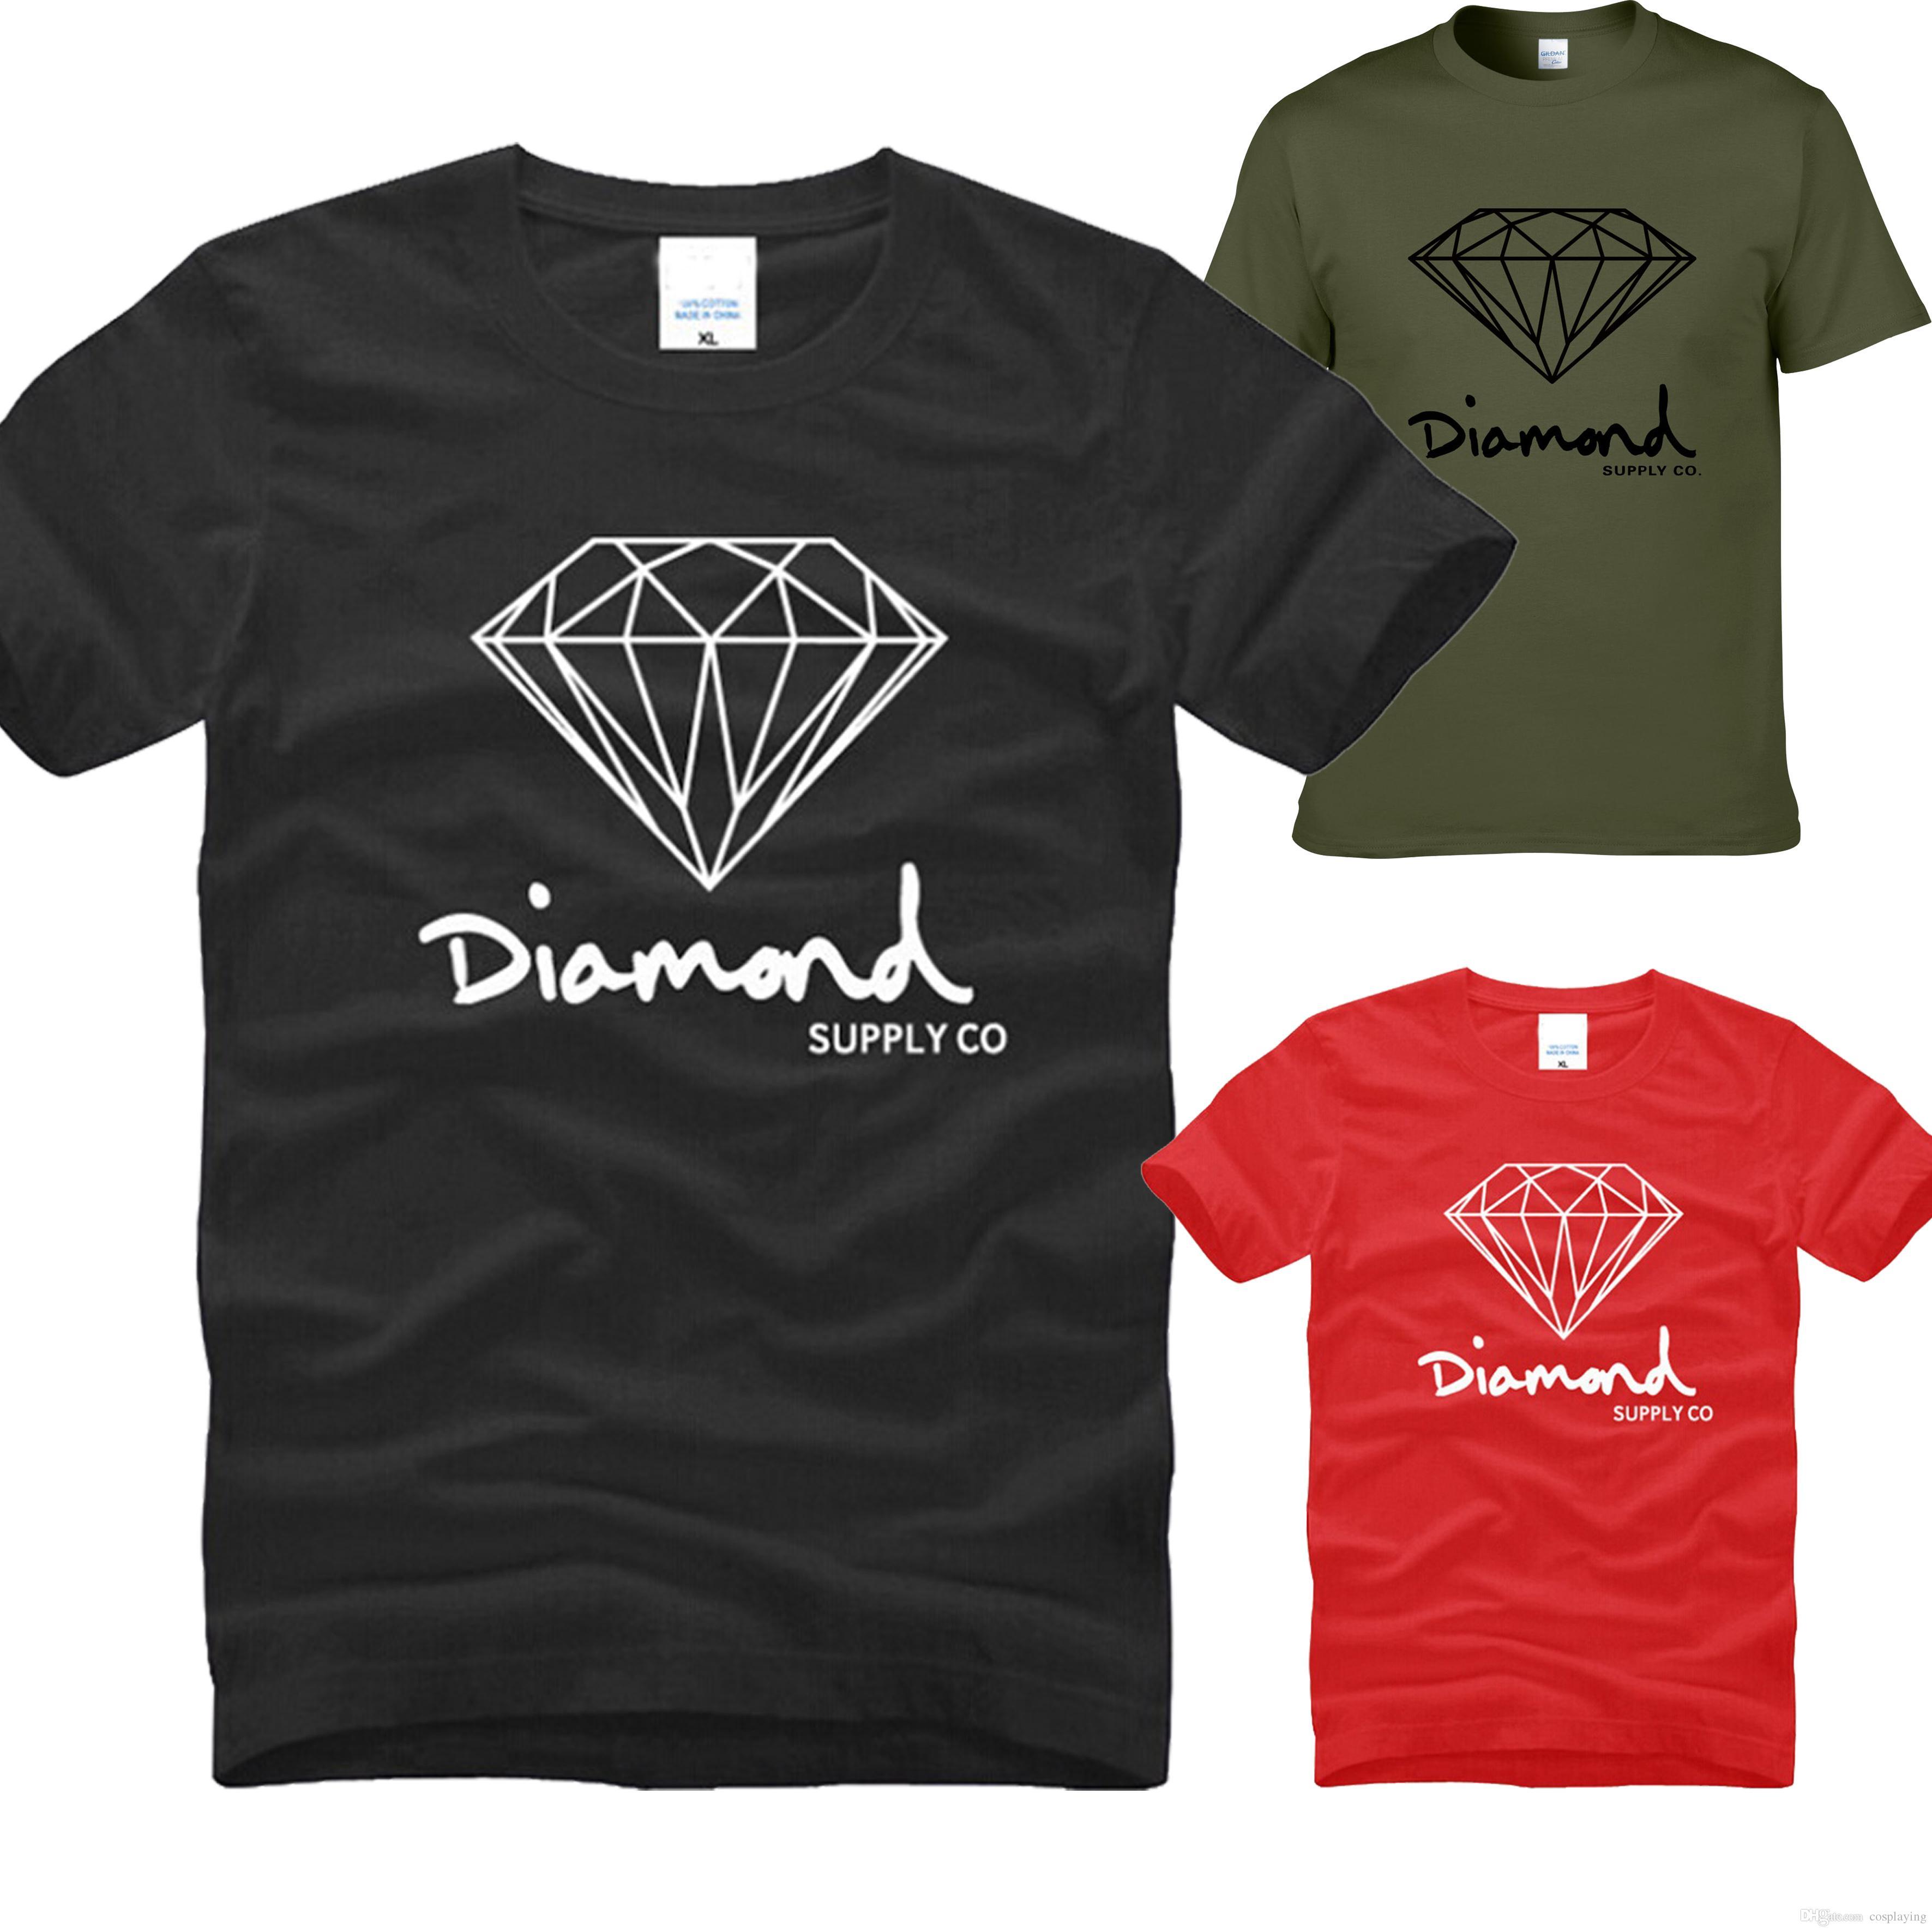 Diamond Supply Co Clothing Logo - Diamond Supply Co Printed T Shirt Men'S Fashion Brand Design Clothes